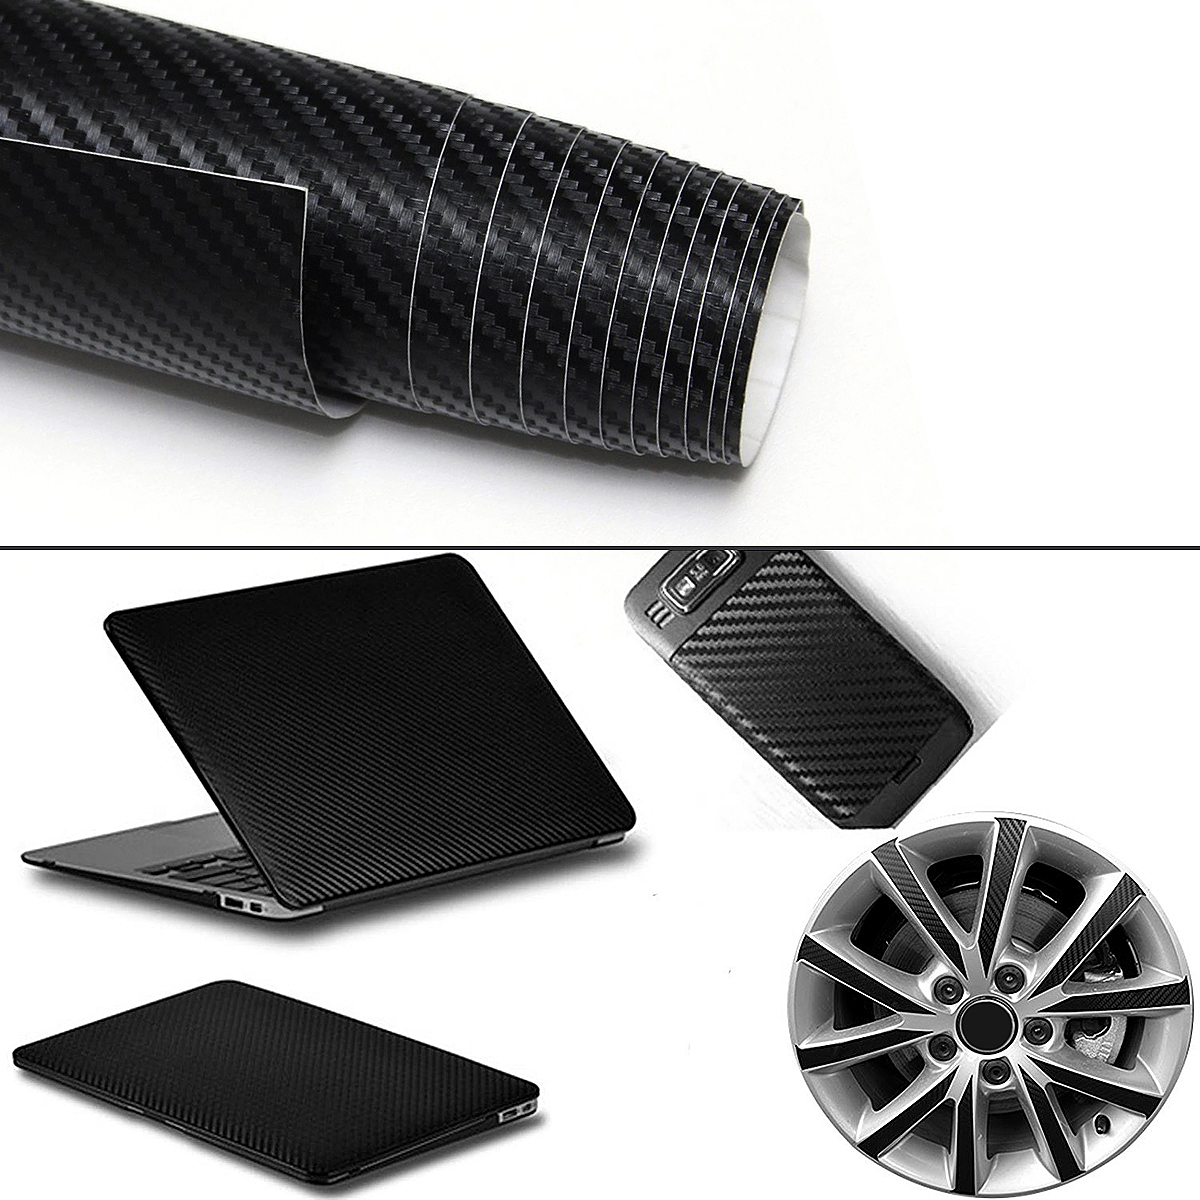 3D Carbon Fiber Vinyl Film Wrap Sheet Auto DIY Sticker Car Decal - Black